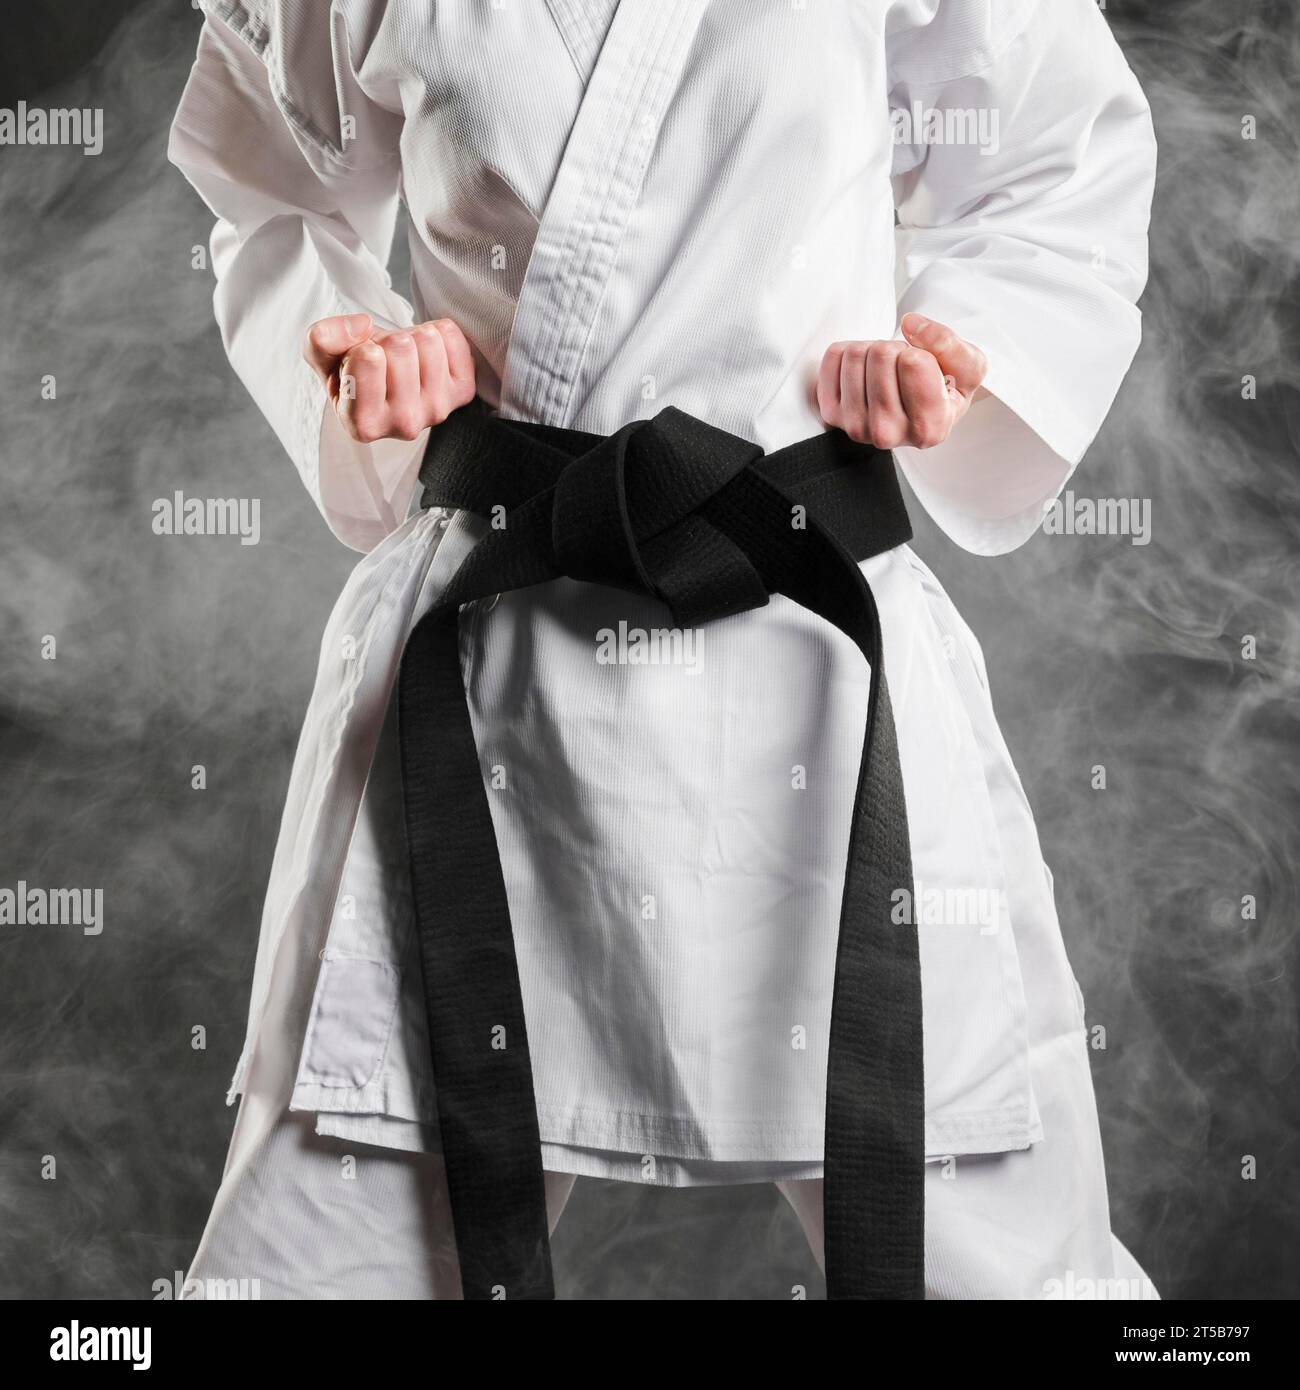 Fighter kimono with black belt Stock Photo